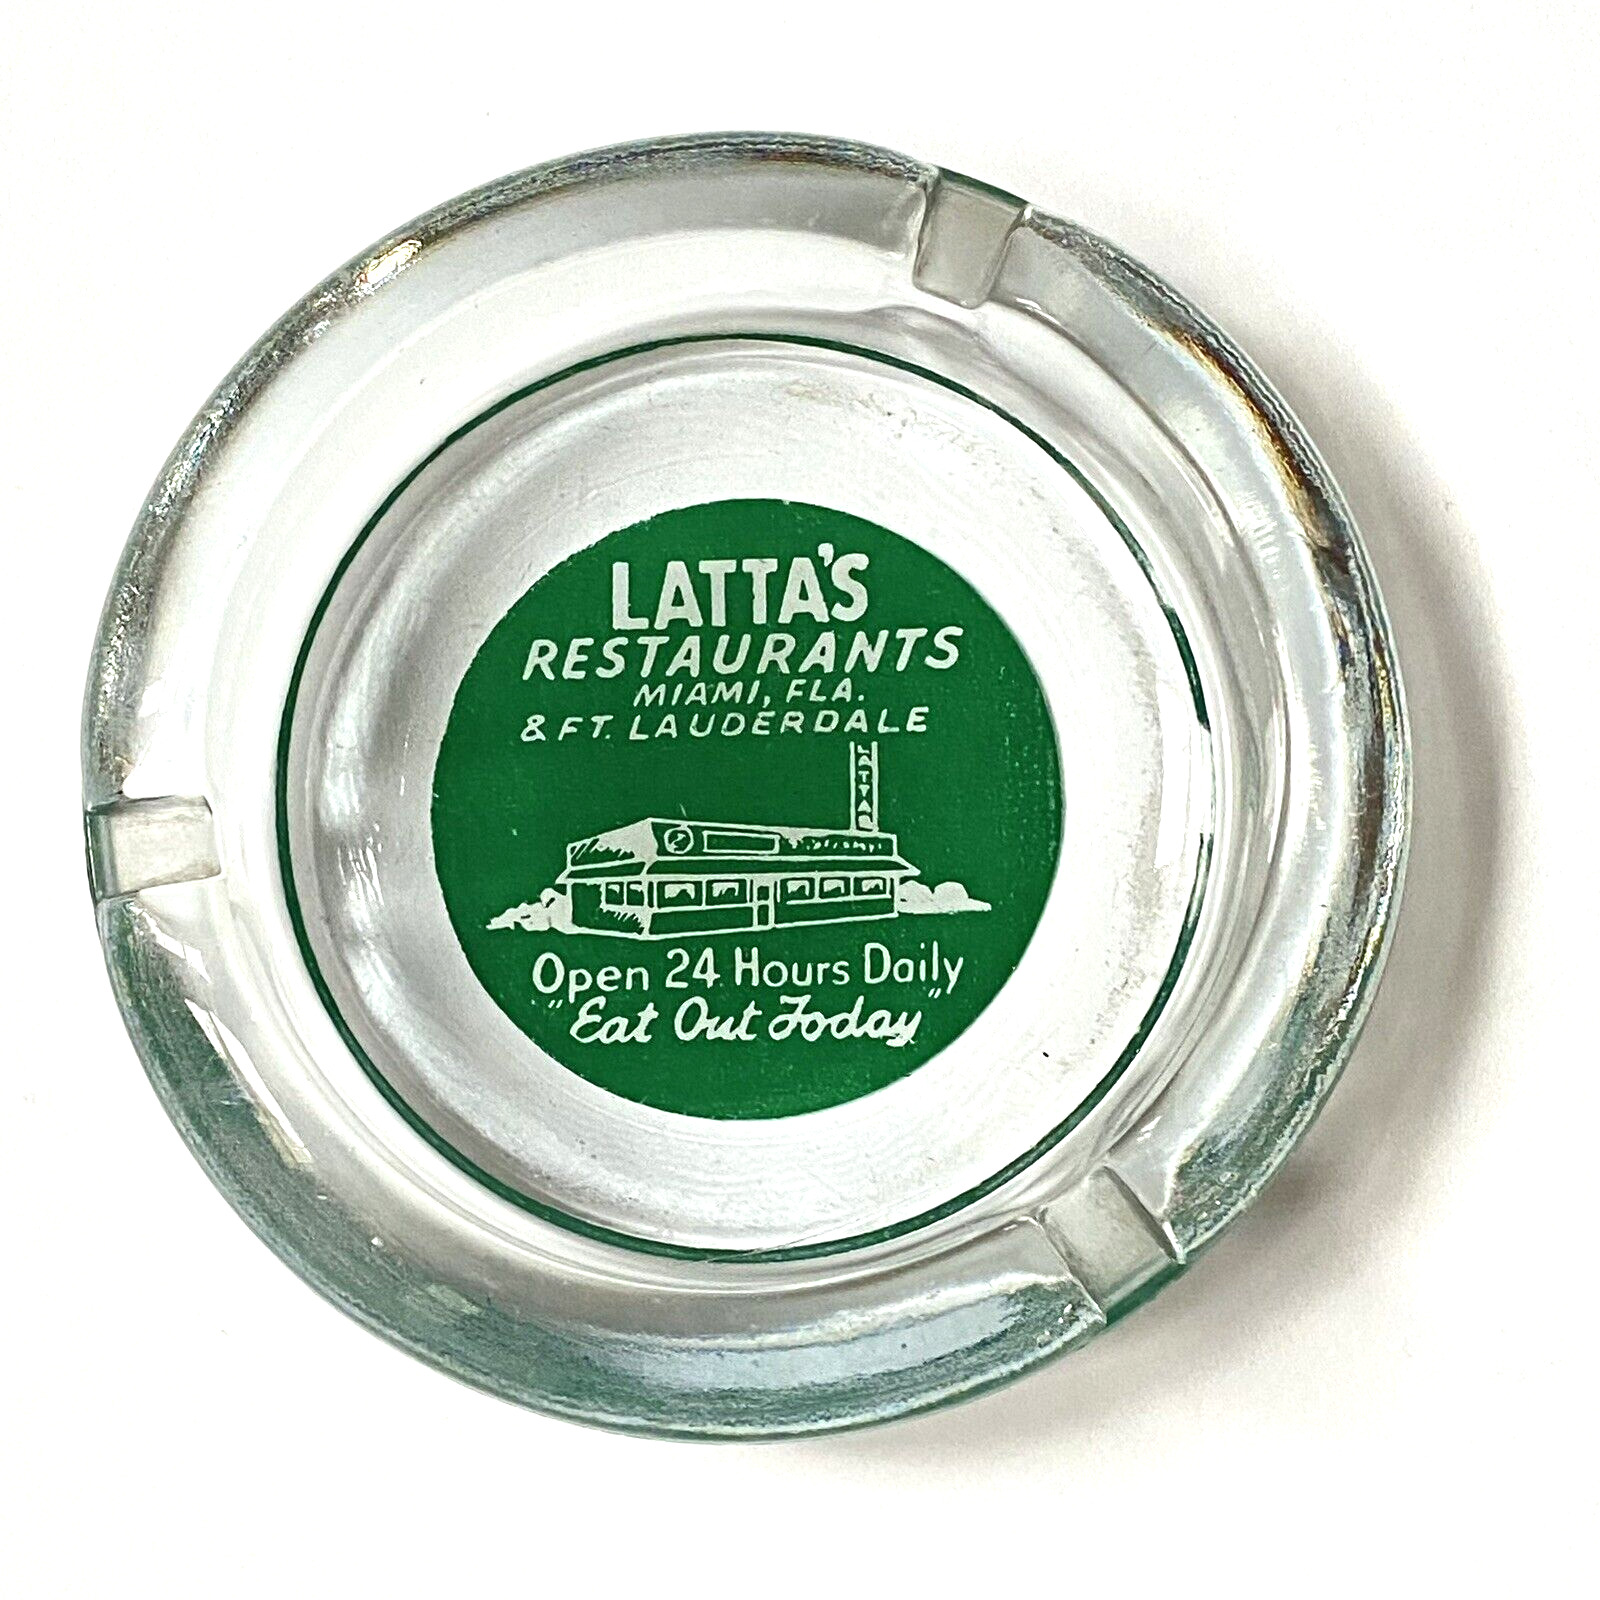 Vintage 1950s Miami Florida Latta's Restaurant Glass Ashtray Ft. Lauderdale